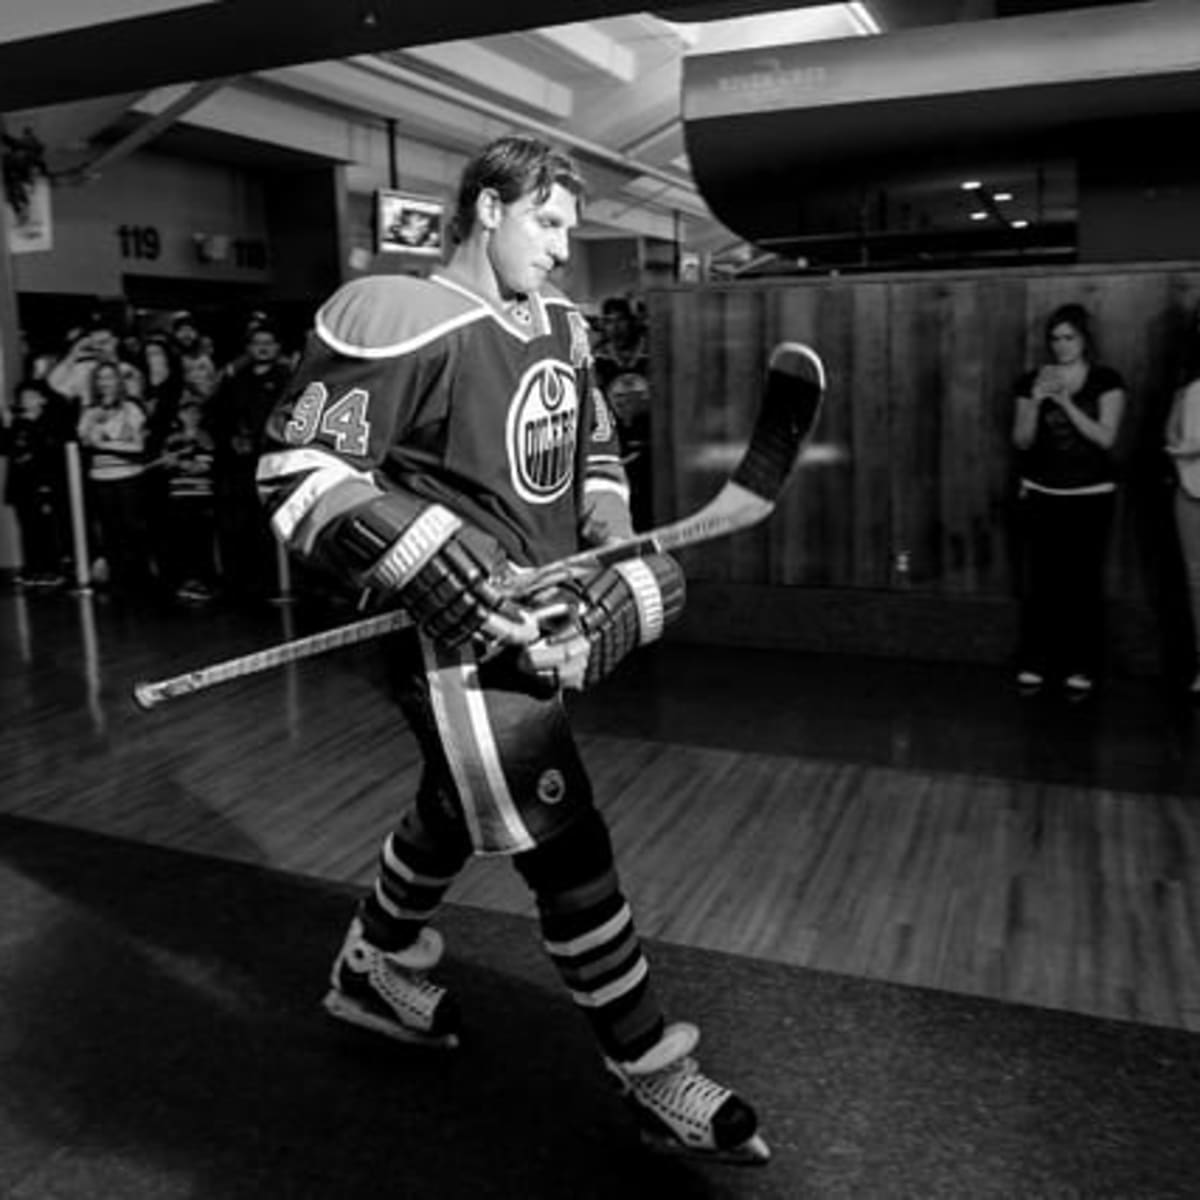 Edmonton Oilers' Ryan Smyth to retire at end of NHL season